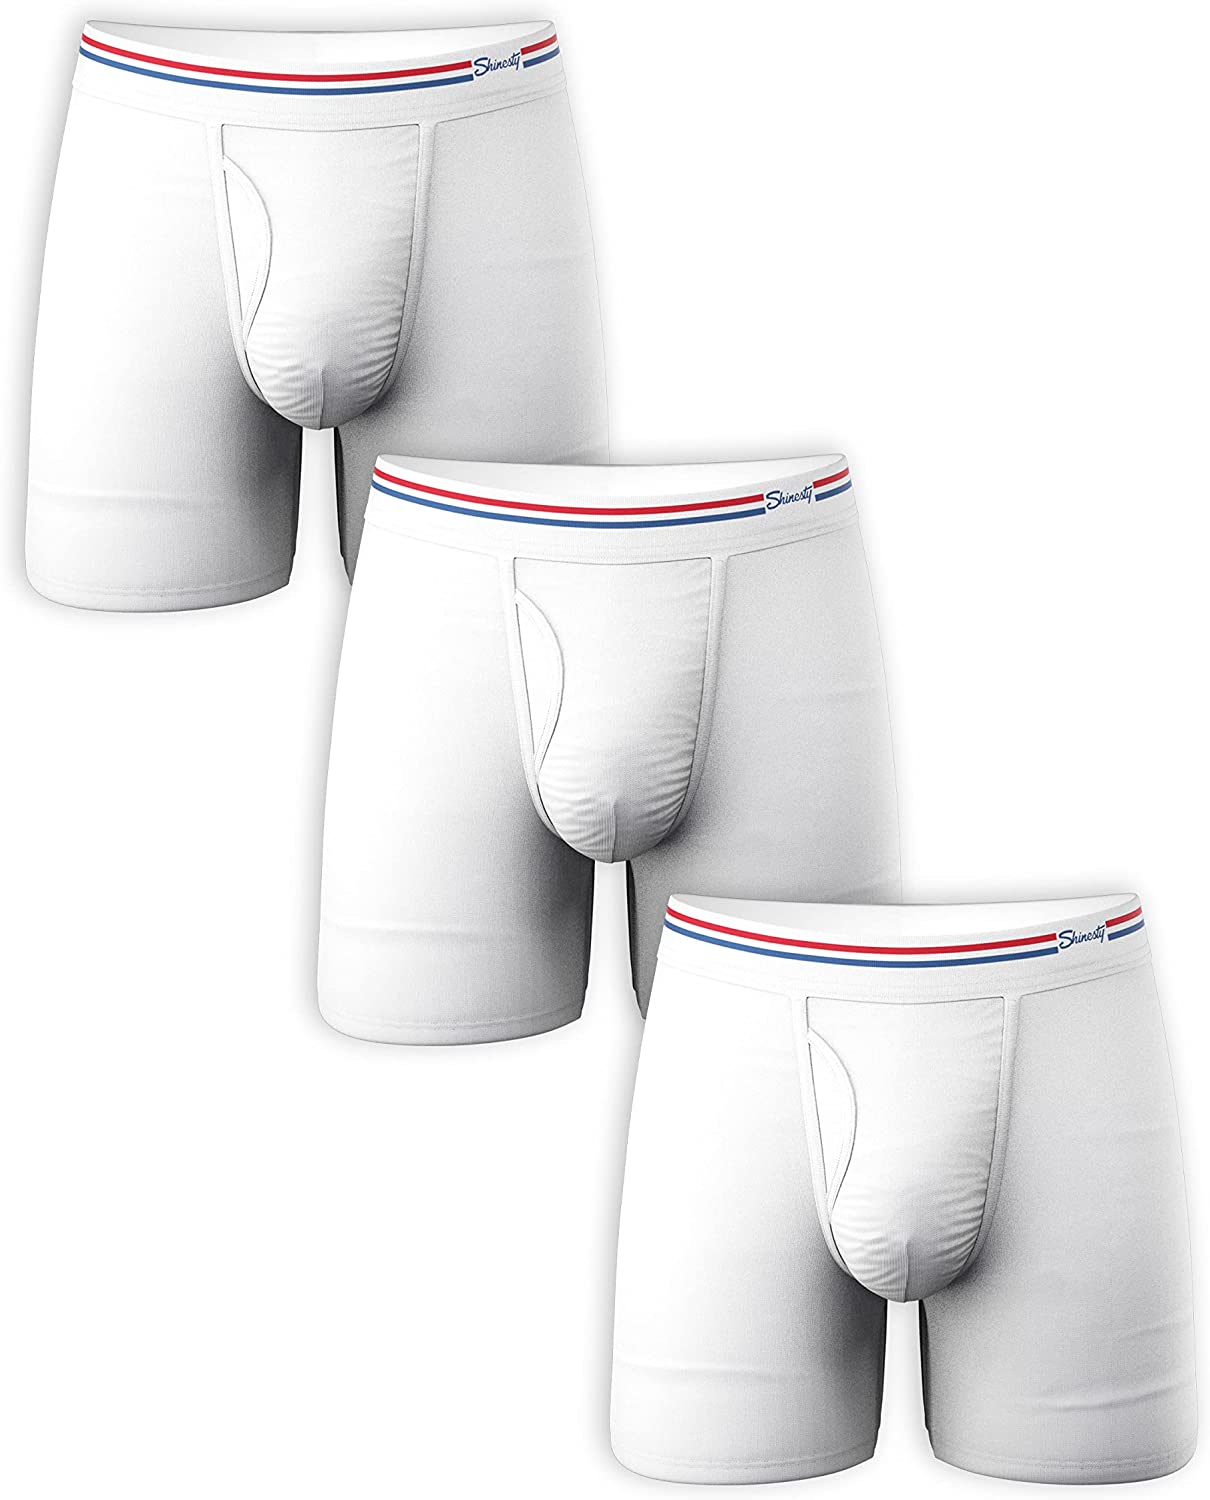 New! Shinesty Ball Hammock Ball Pouch Underwear US Medium Hot Dog- M Size